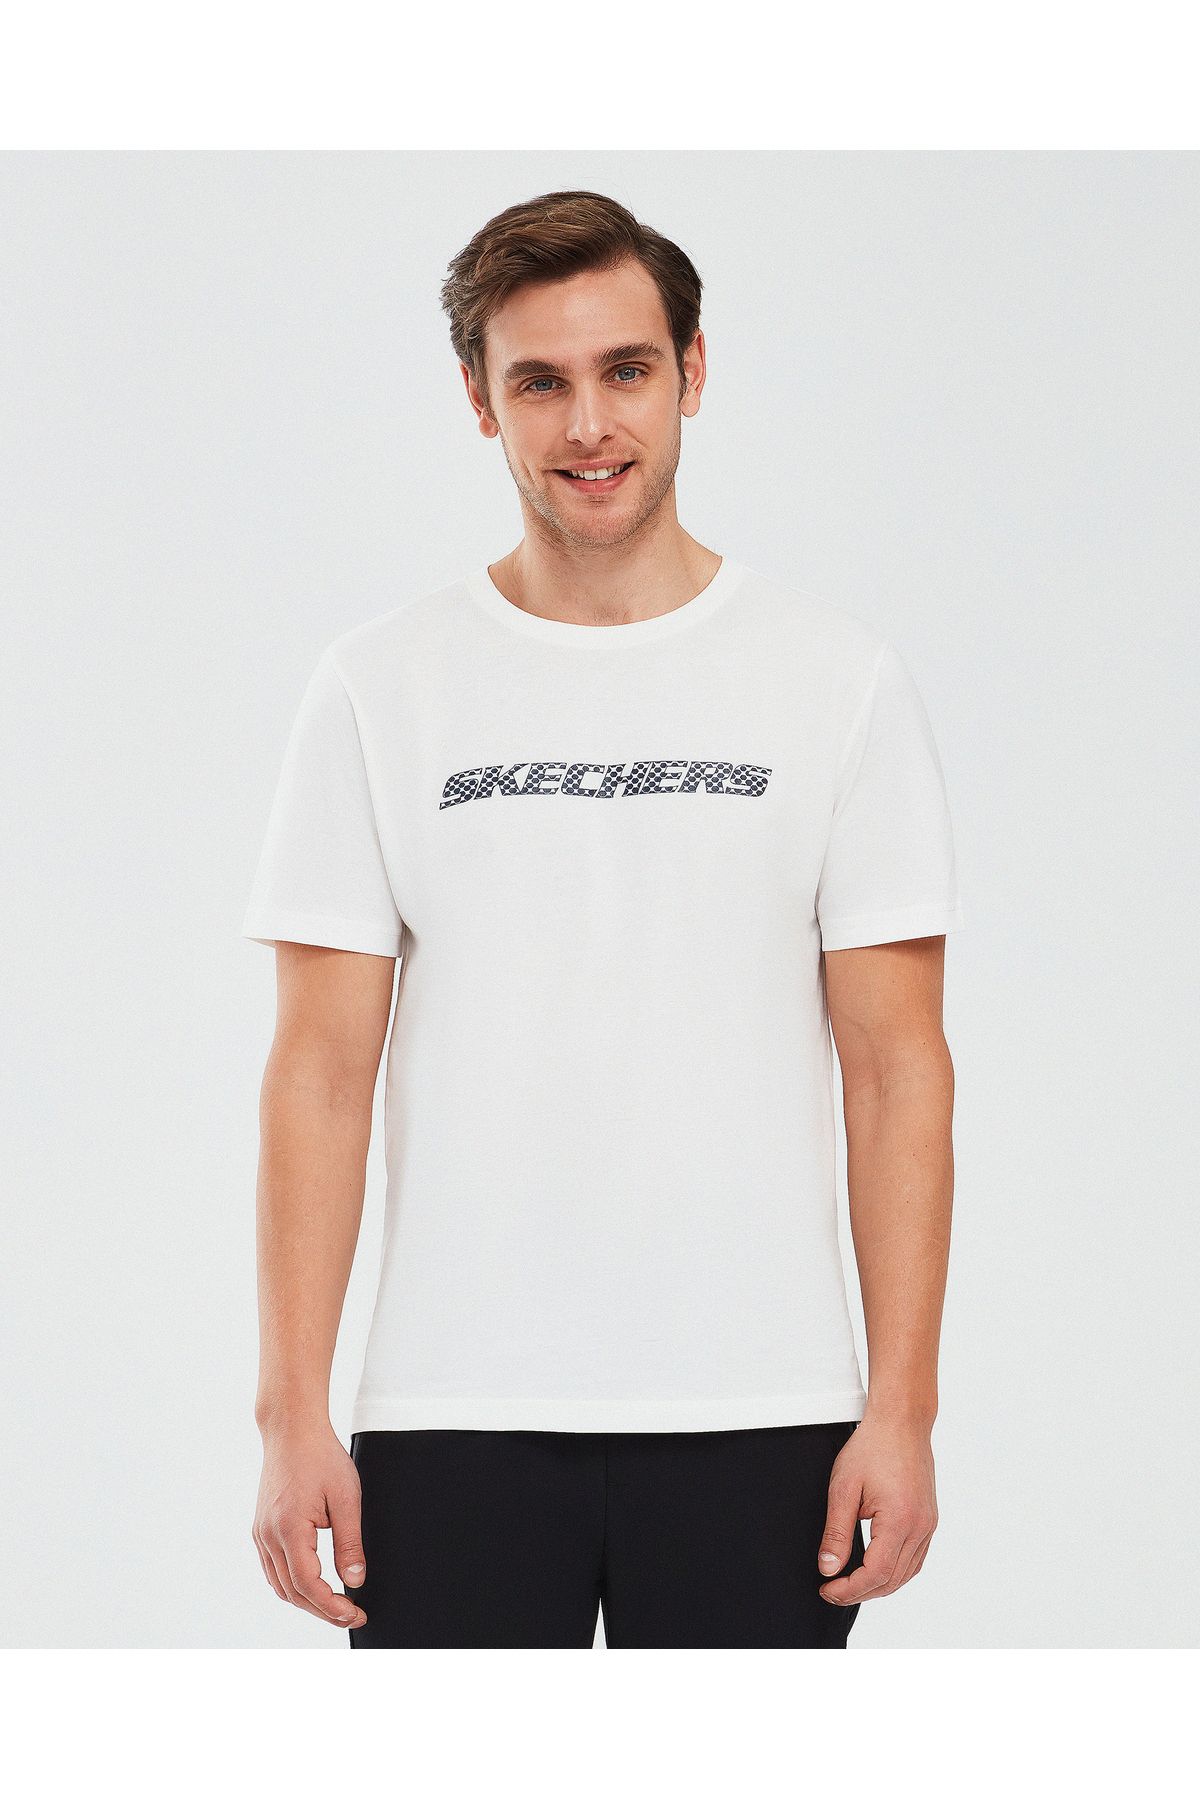 Skechers M Graphic Tee Big Logo T-shirt Erkek Beyaz Tshirt S212960-102